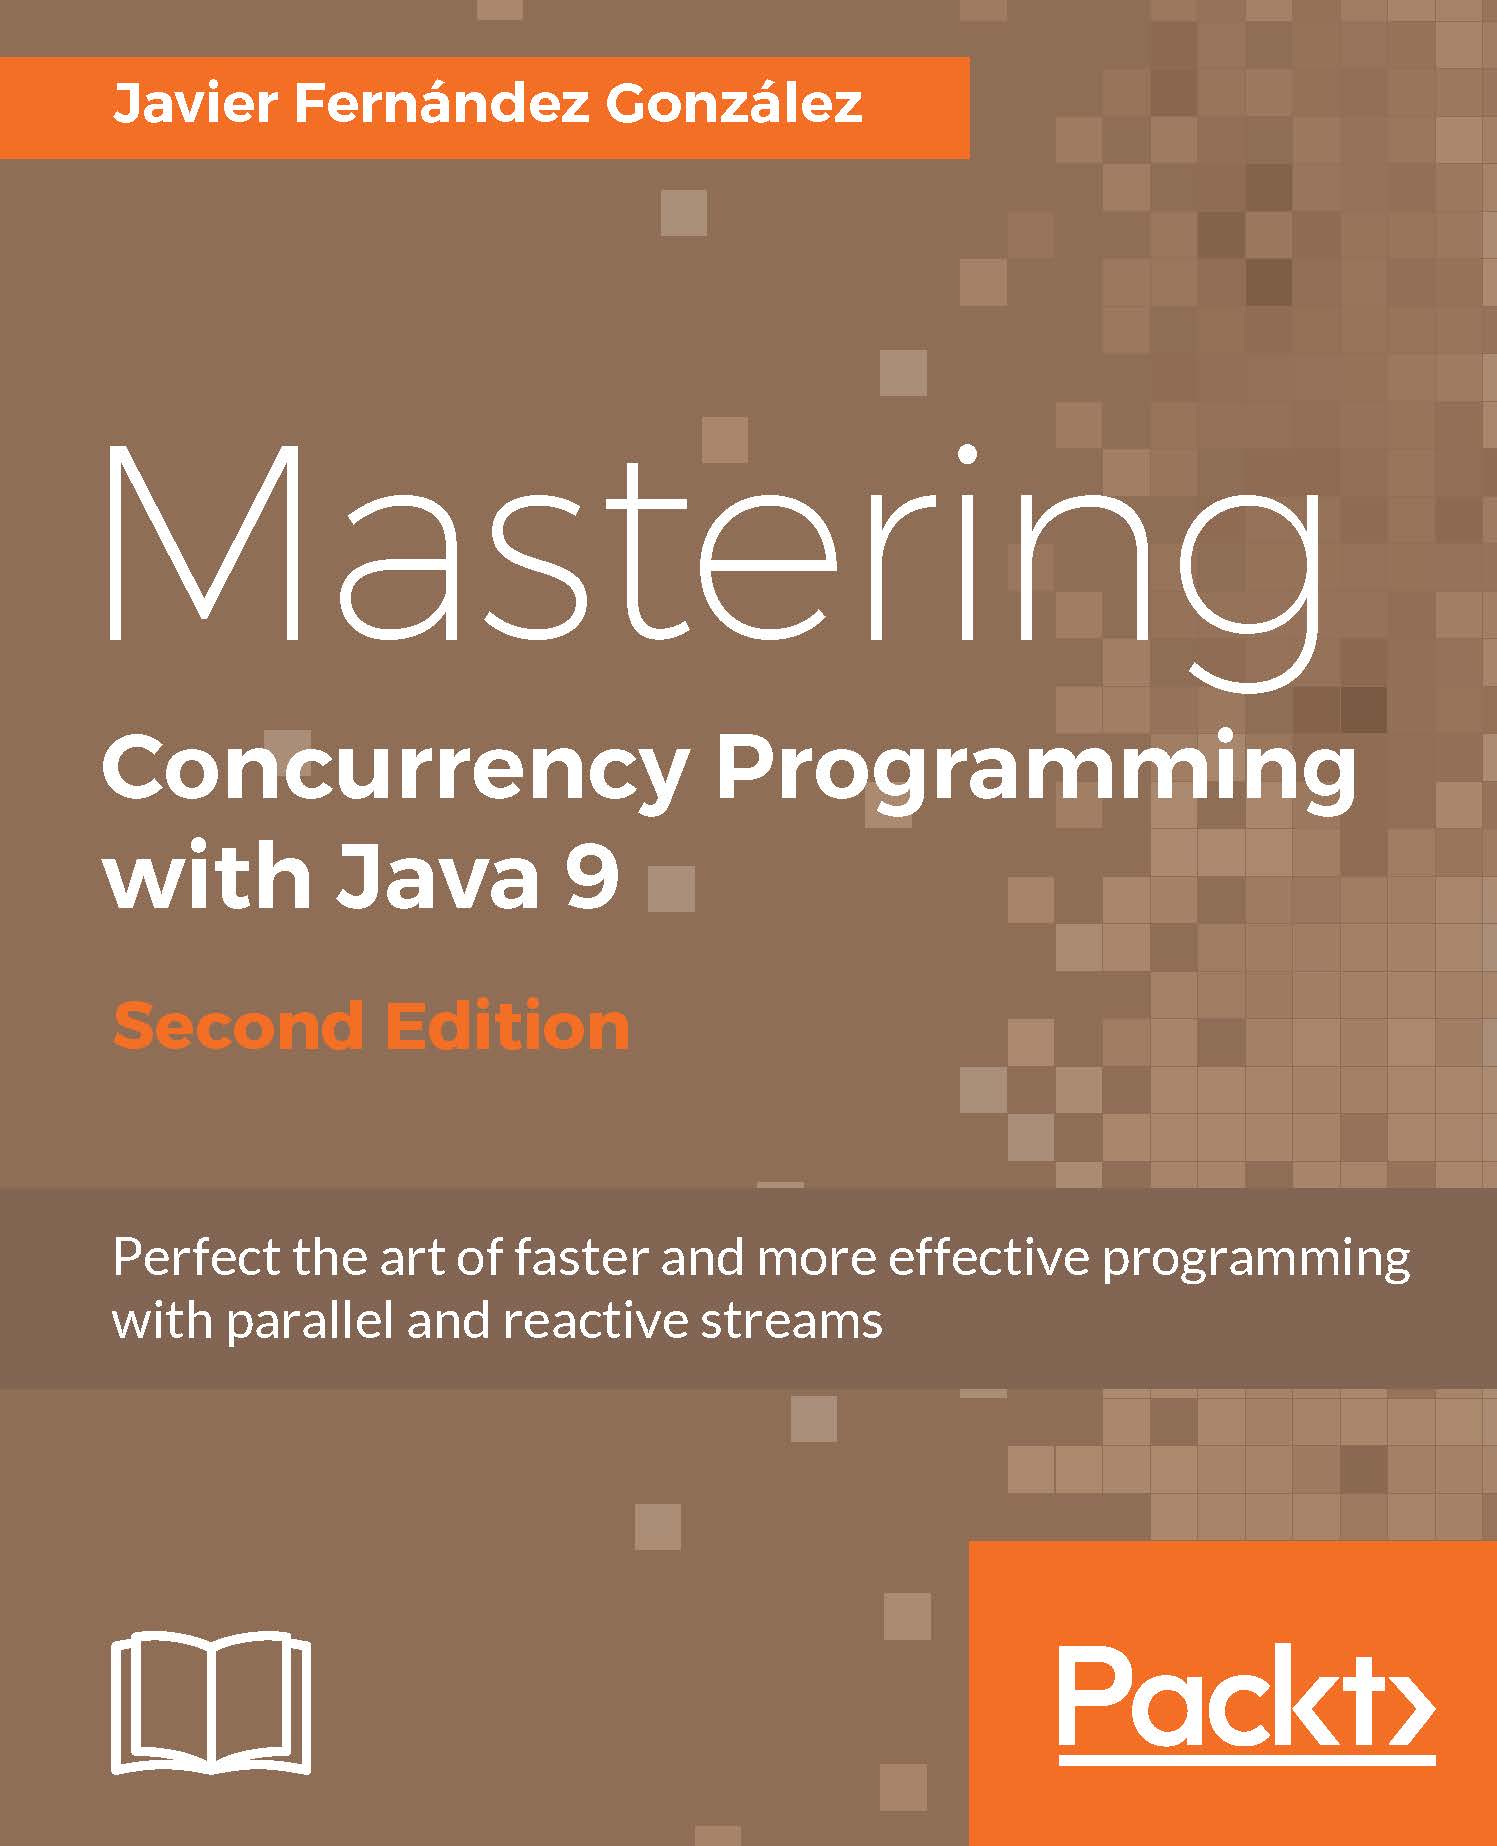 Java concurrency. Java Concurrency книга. Java 9. Java Concurrency на практике купить. Programming Master.